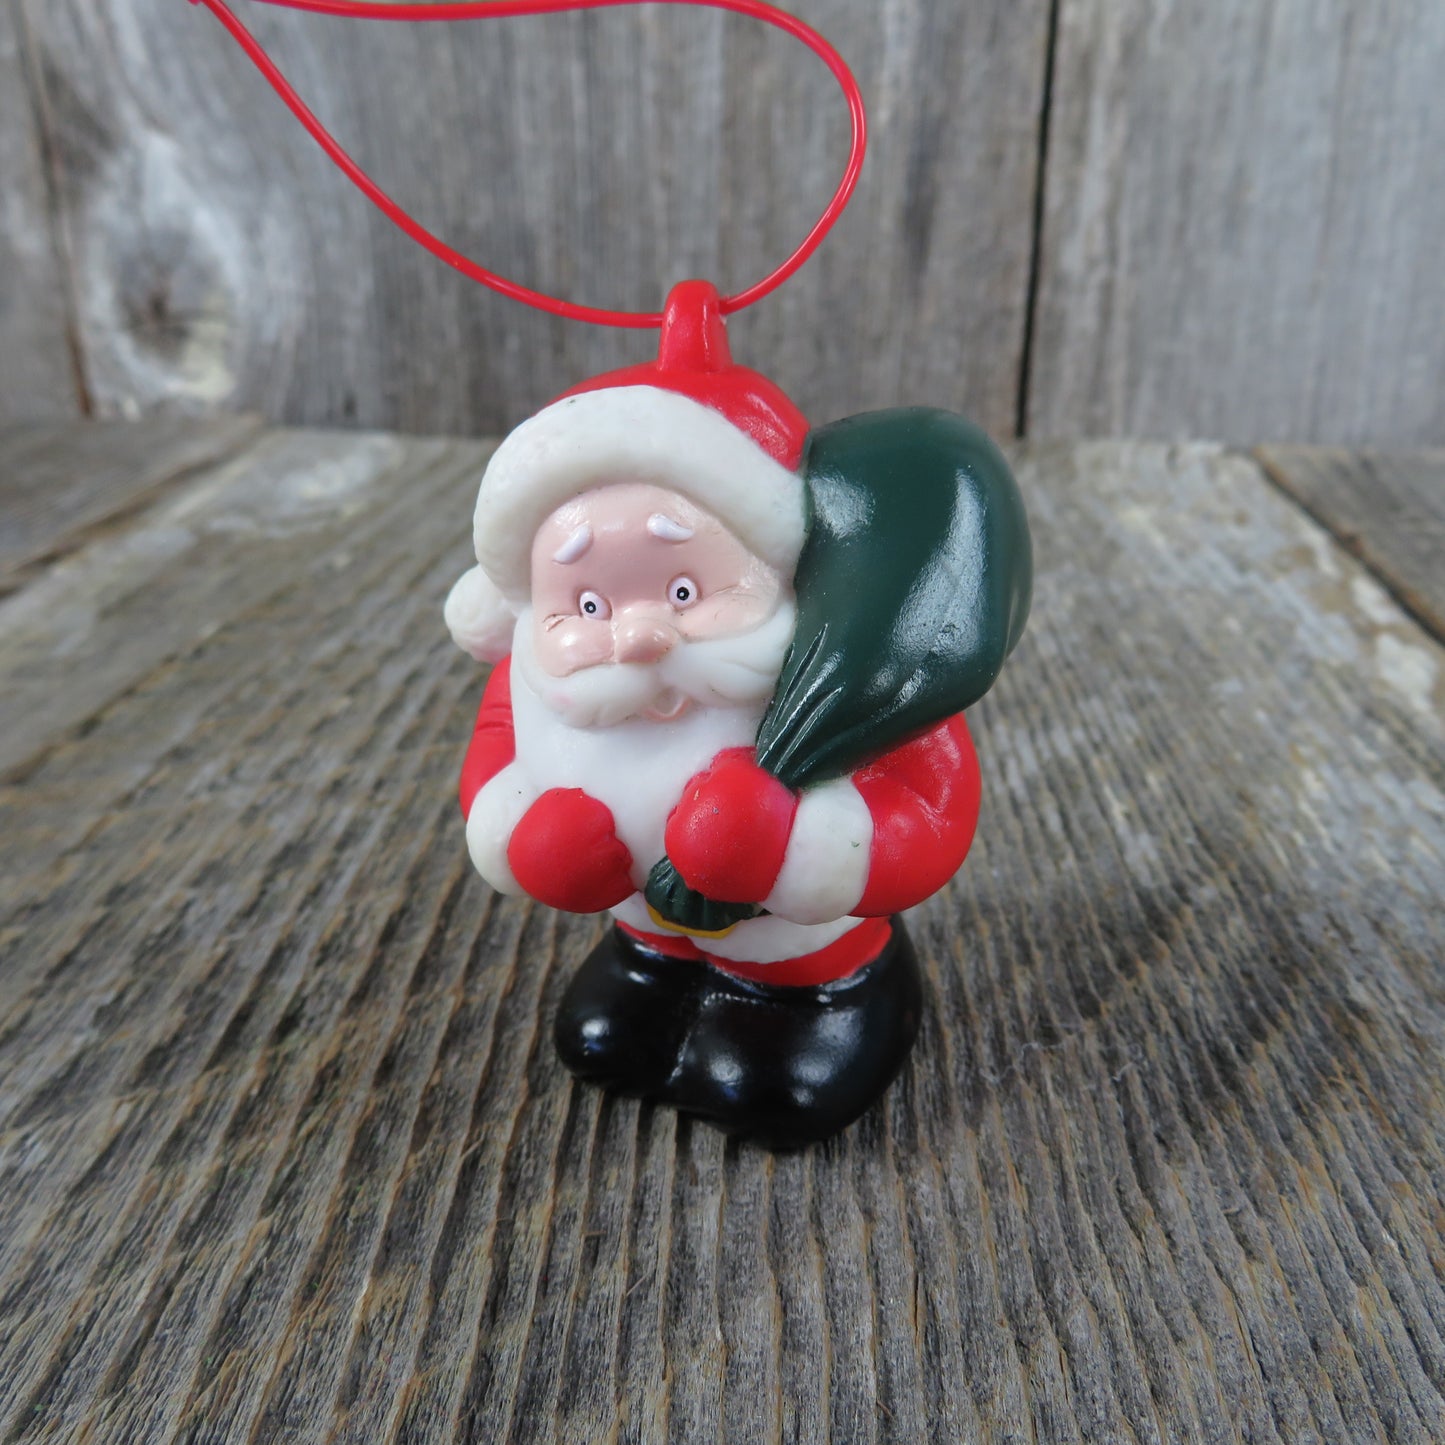 Vintage Santa Claus with Sack Ornament Figurine Plastic Green Bag Christmas Village - At Grandma's Table